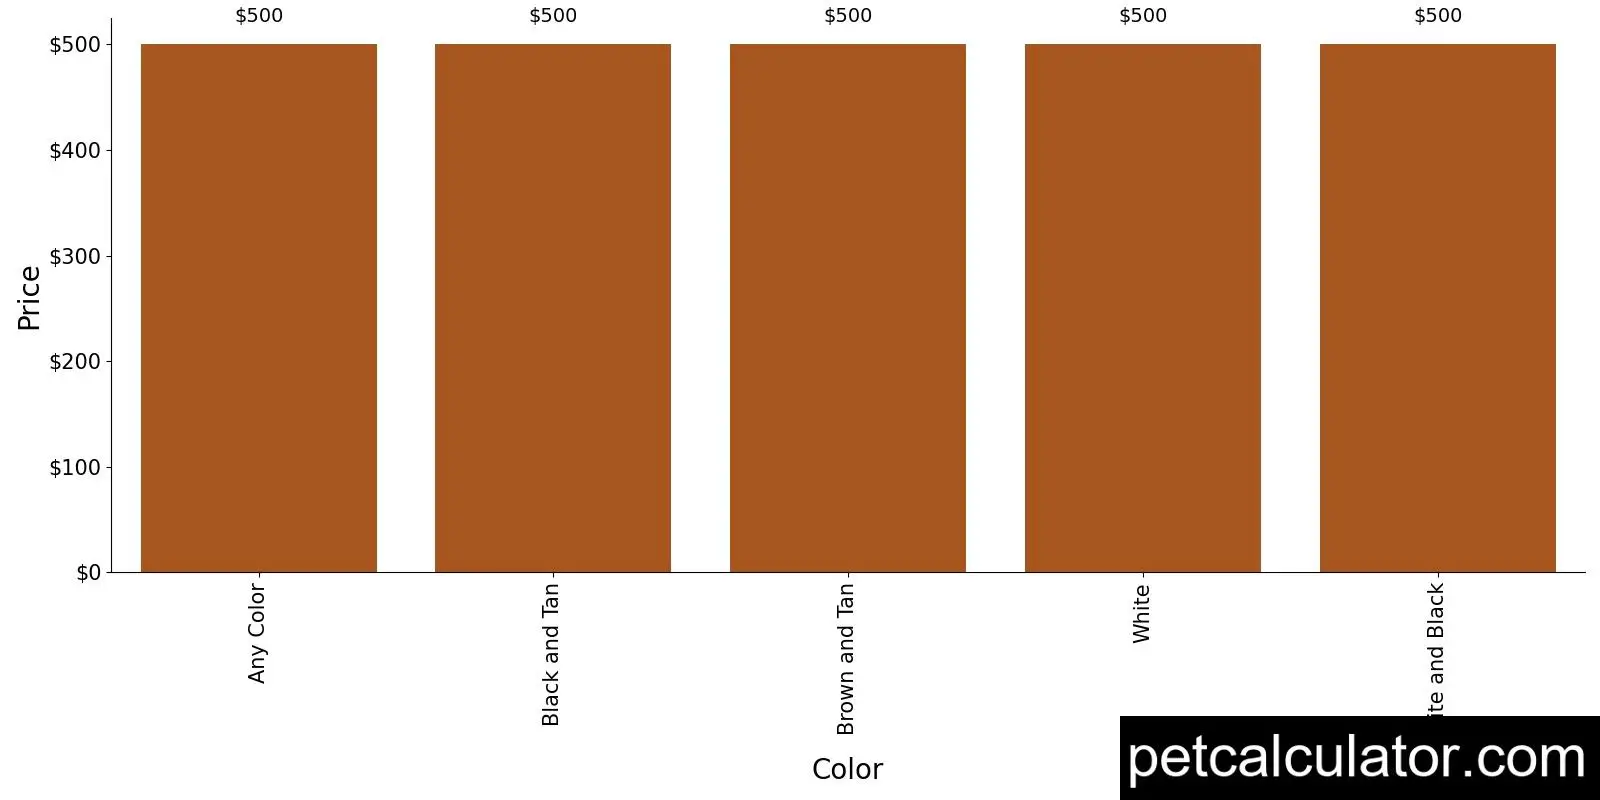 Price of Carolina Dog by Color 